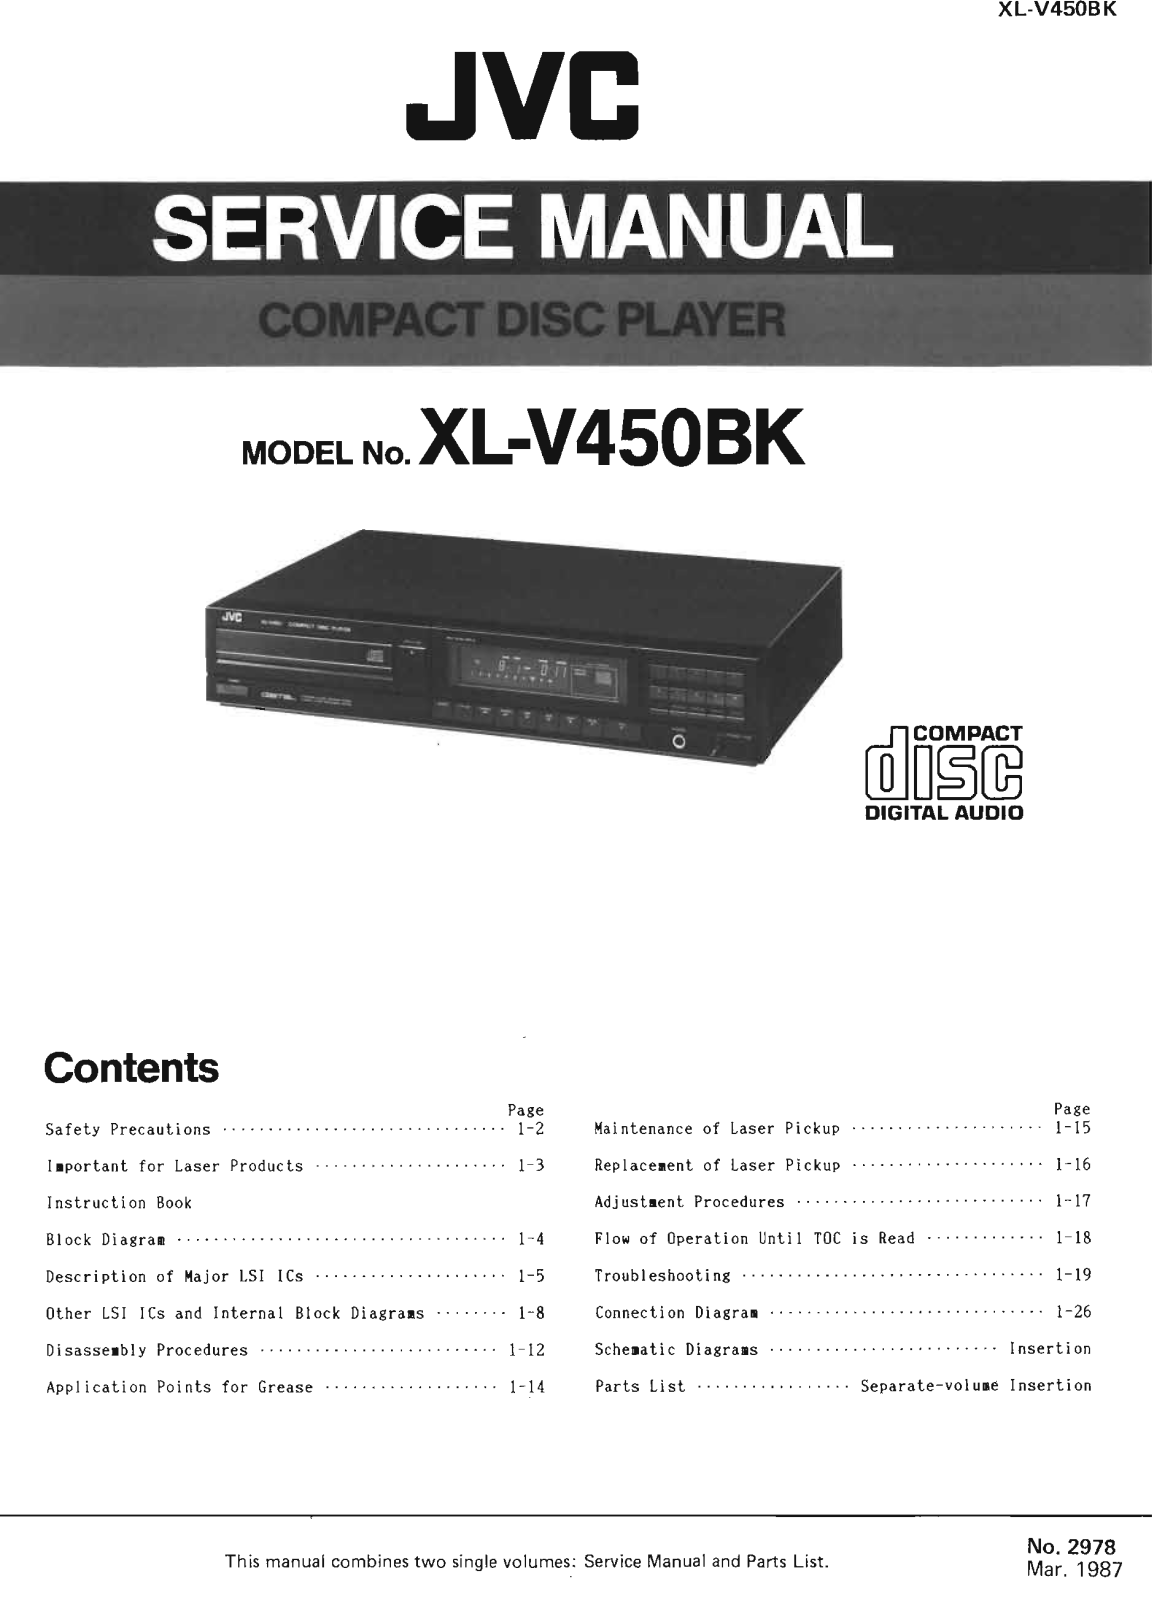 Jvc XL-V450-BK Service Manual